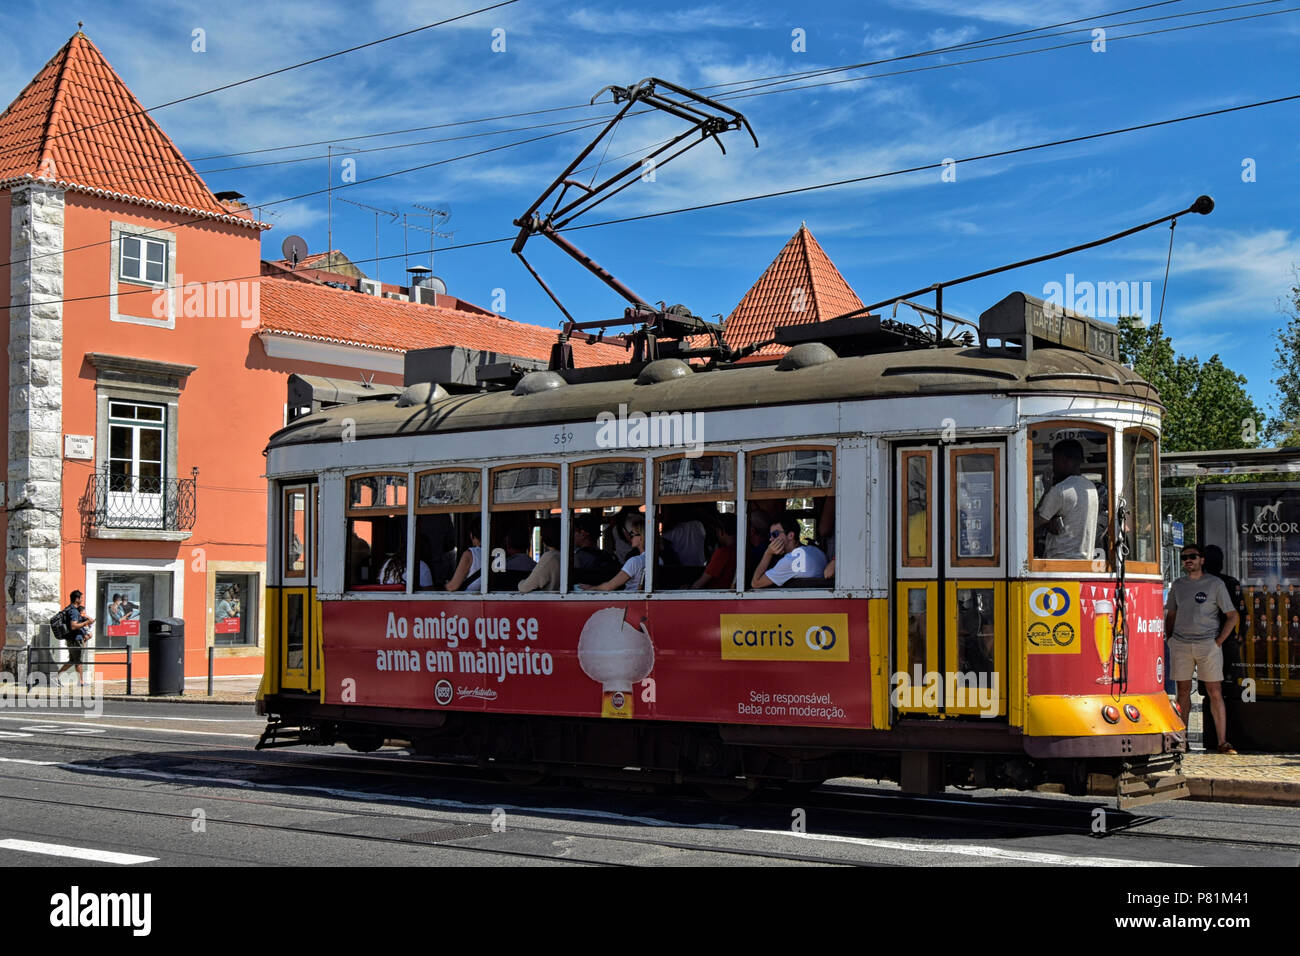 Trasporto pubblico elletrico a Lisbona, Portogallo chiamato elétrico de Lisboa Foto Stock